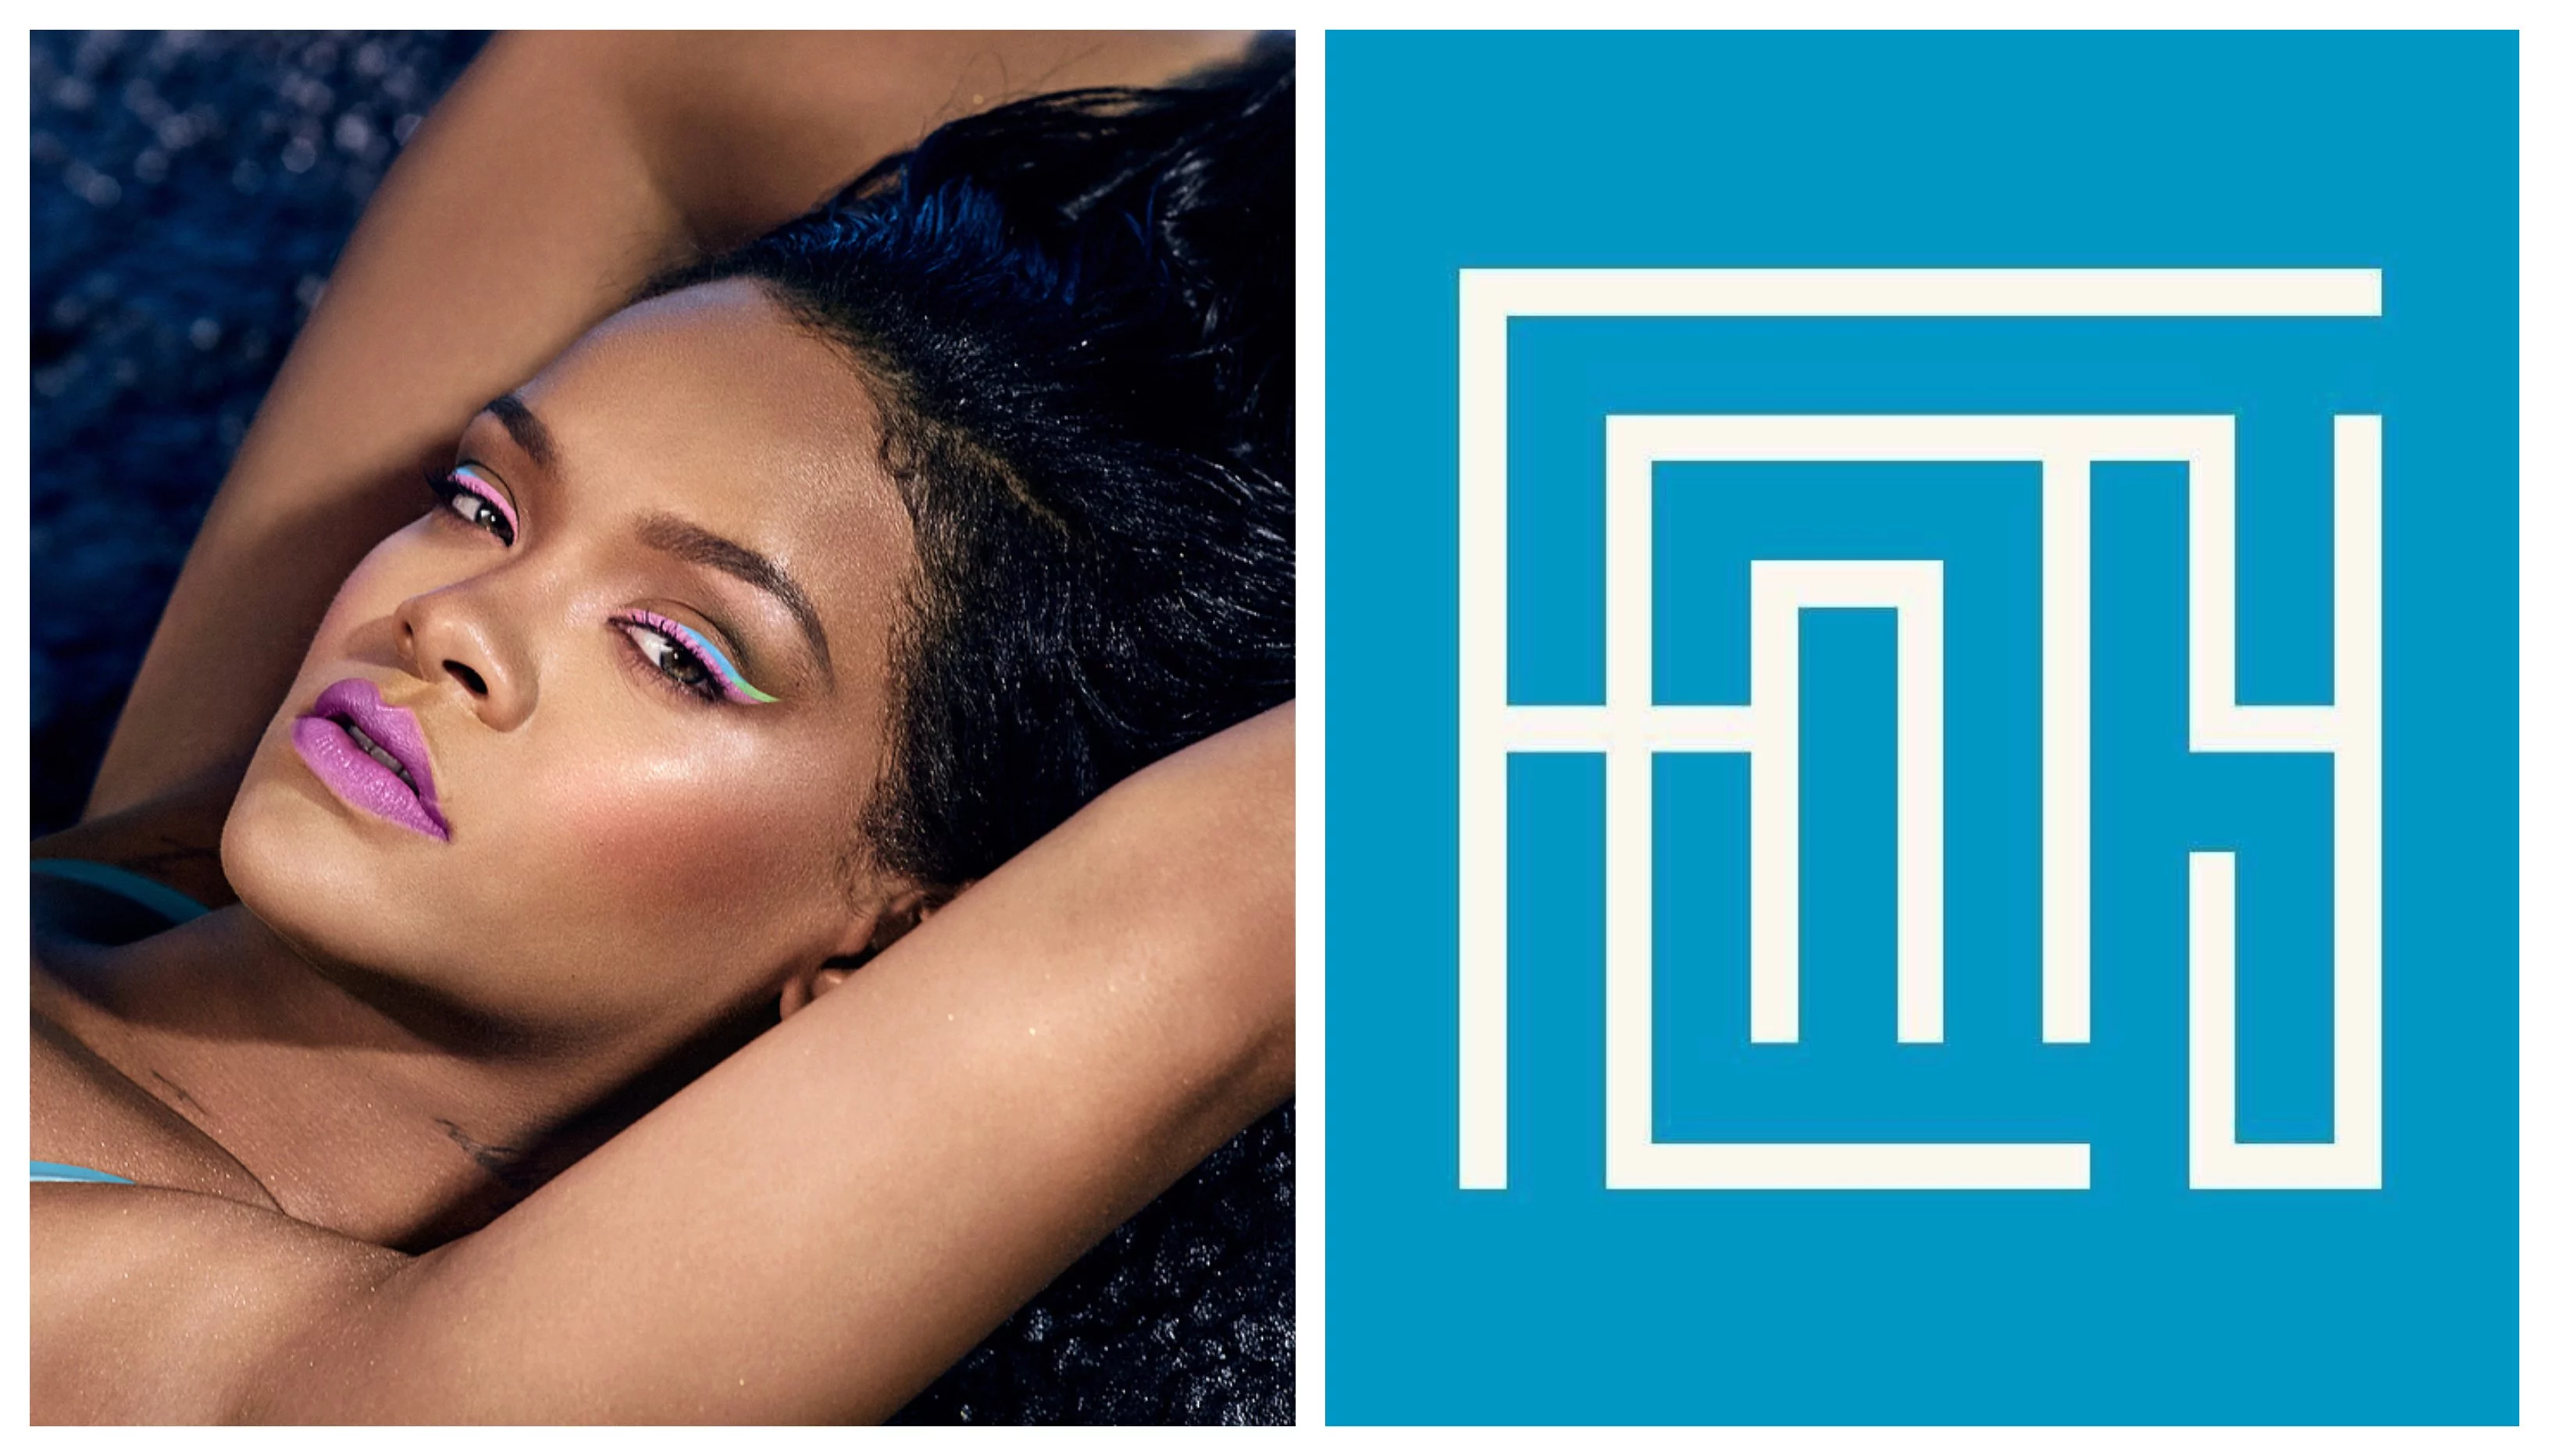 LVMH and Rihanna place luxury fashion line Fenty on hold 